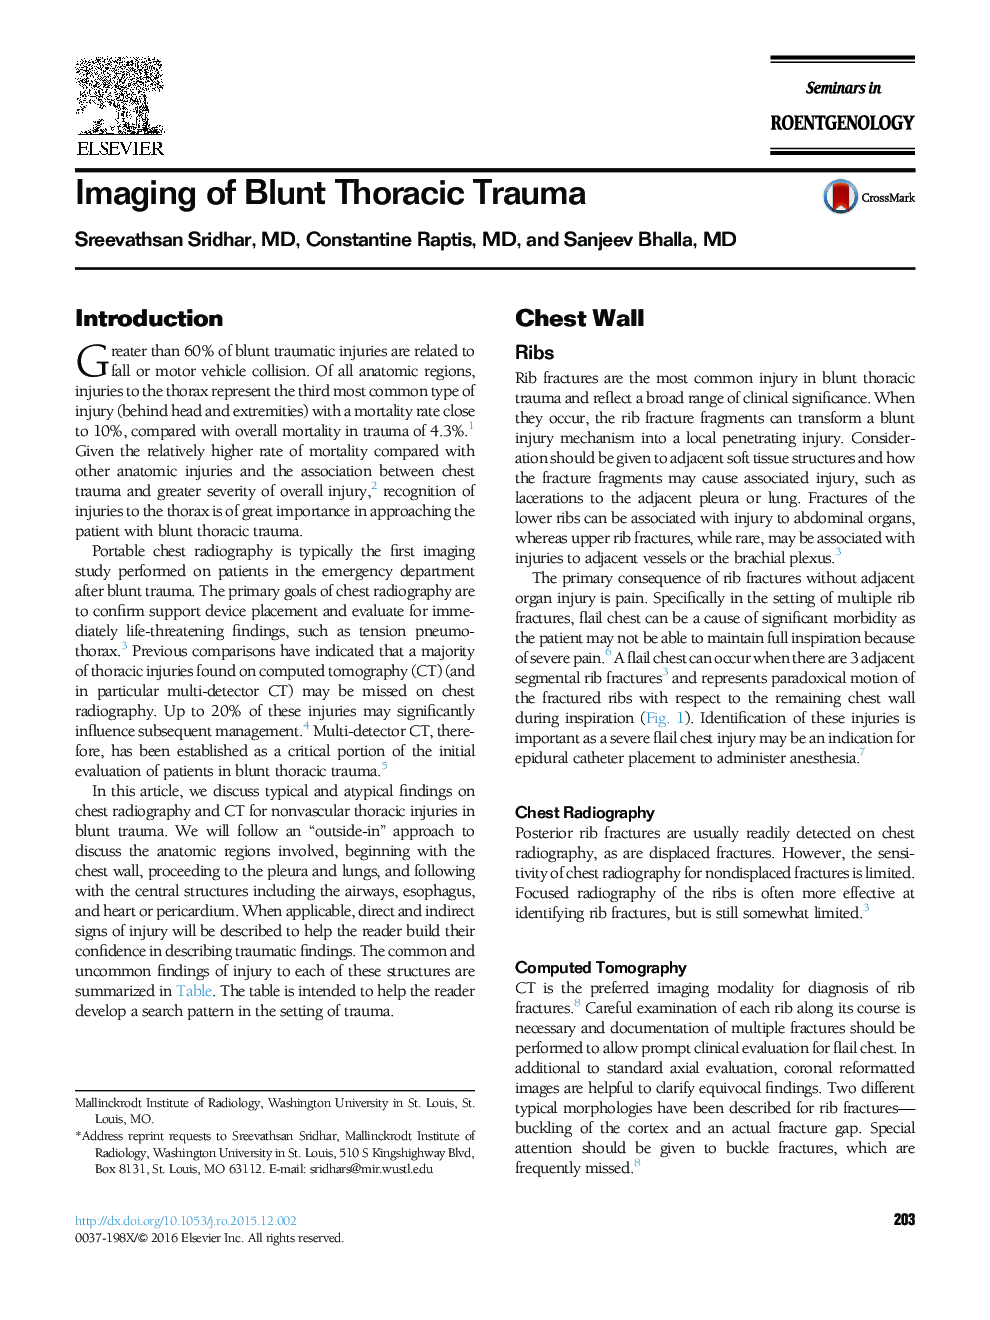 Imaging of Blunt Thoracic Trauma